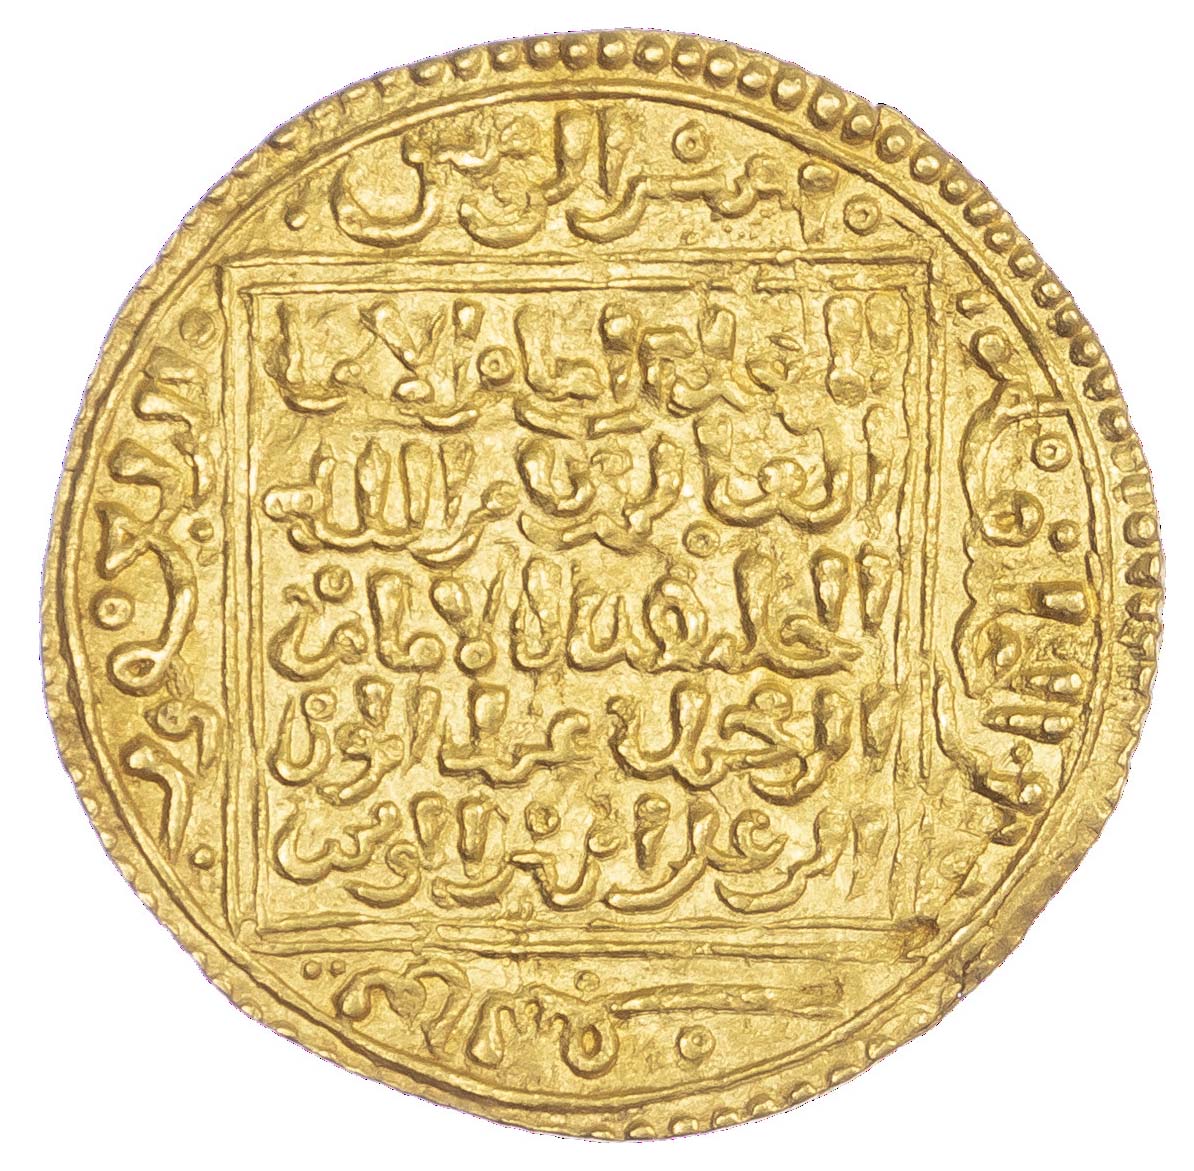 Almohads, Abu'l 'Ula Idris II (AH 665-668 / 1268-1270 AD), gold Dinar